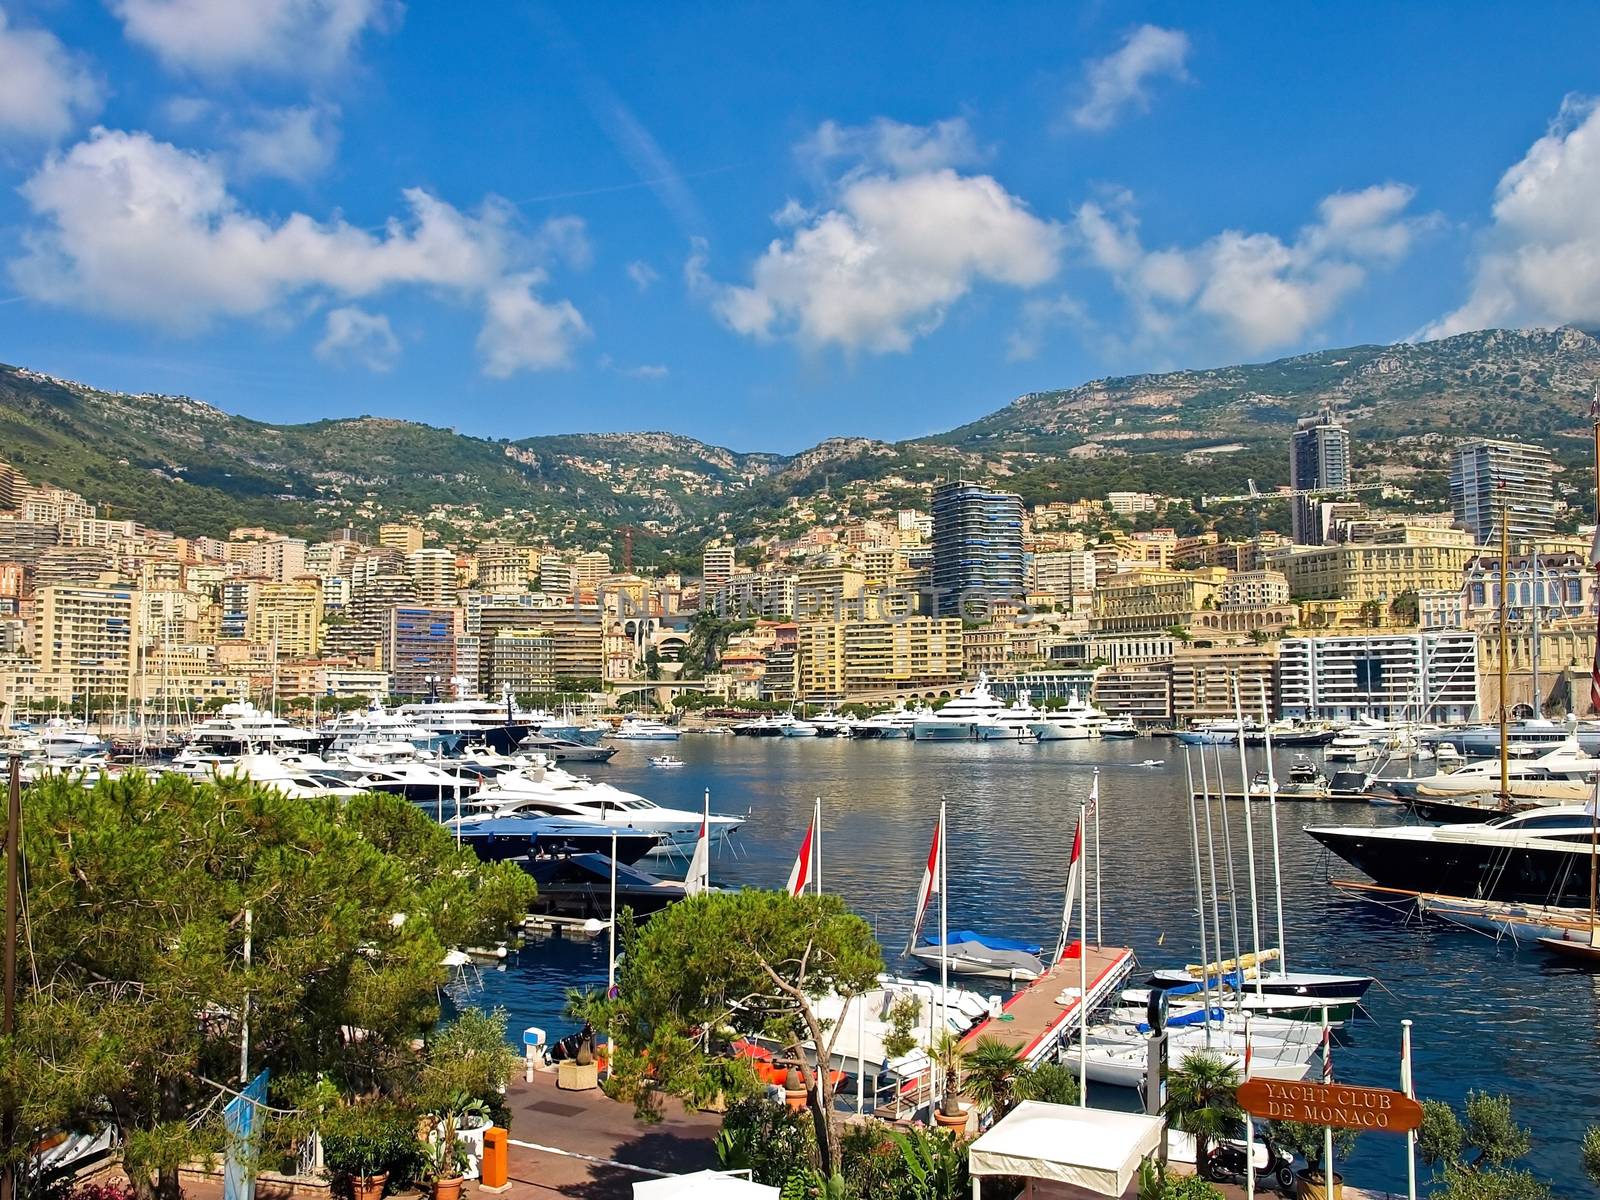 View of the Monte Carlo from Yacht Club de Monaco